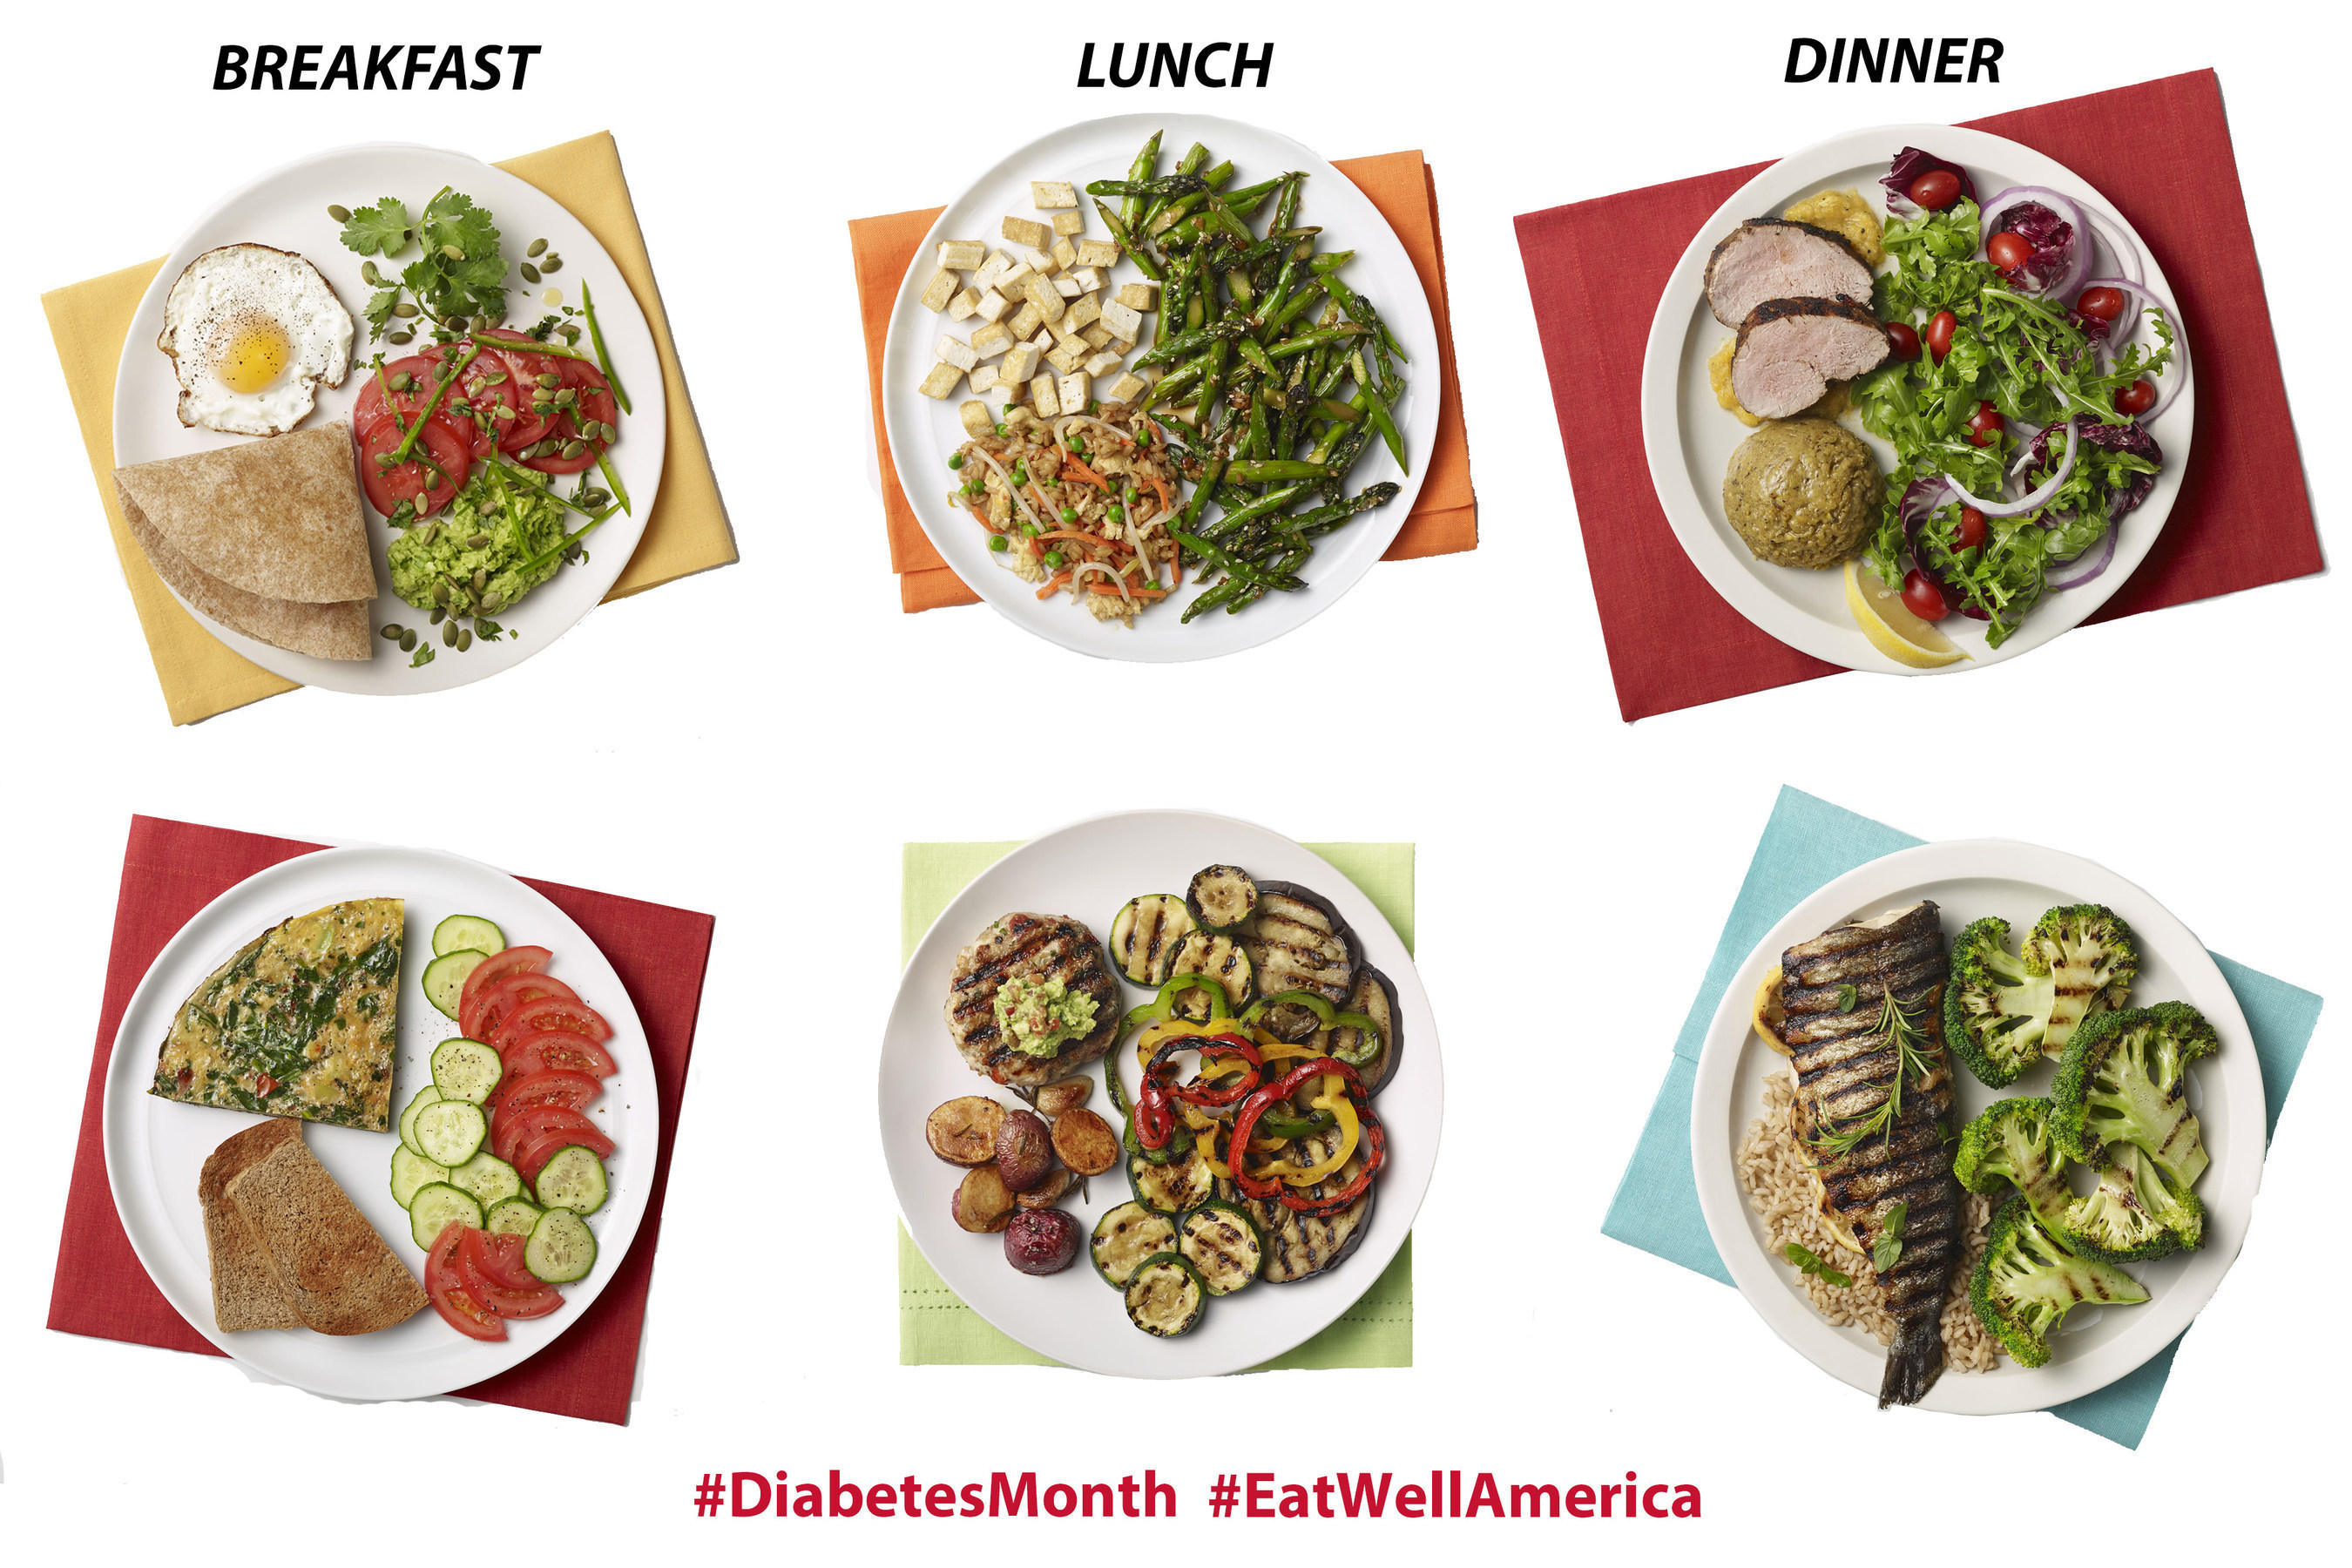 American Diabetes Month: Eat Well, America!